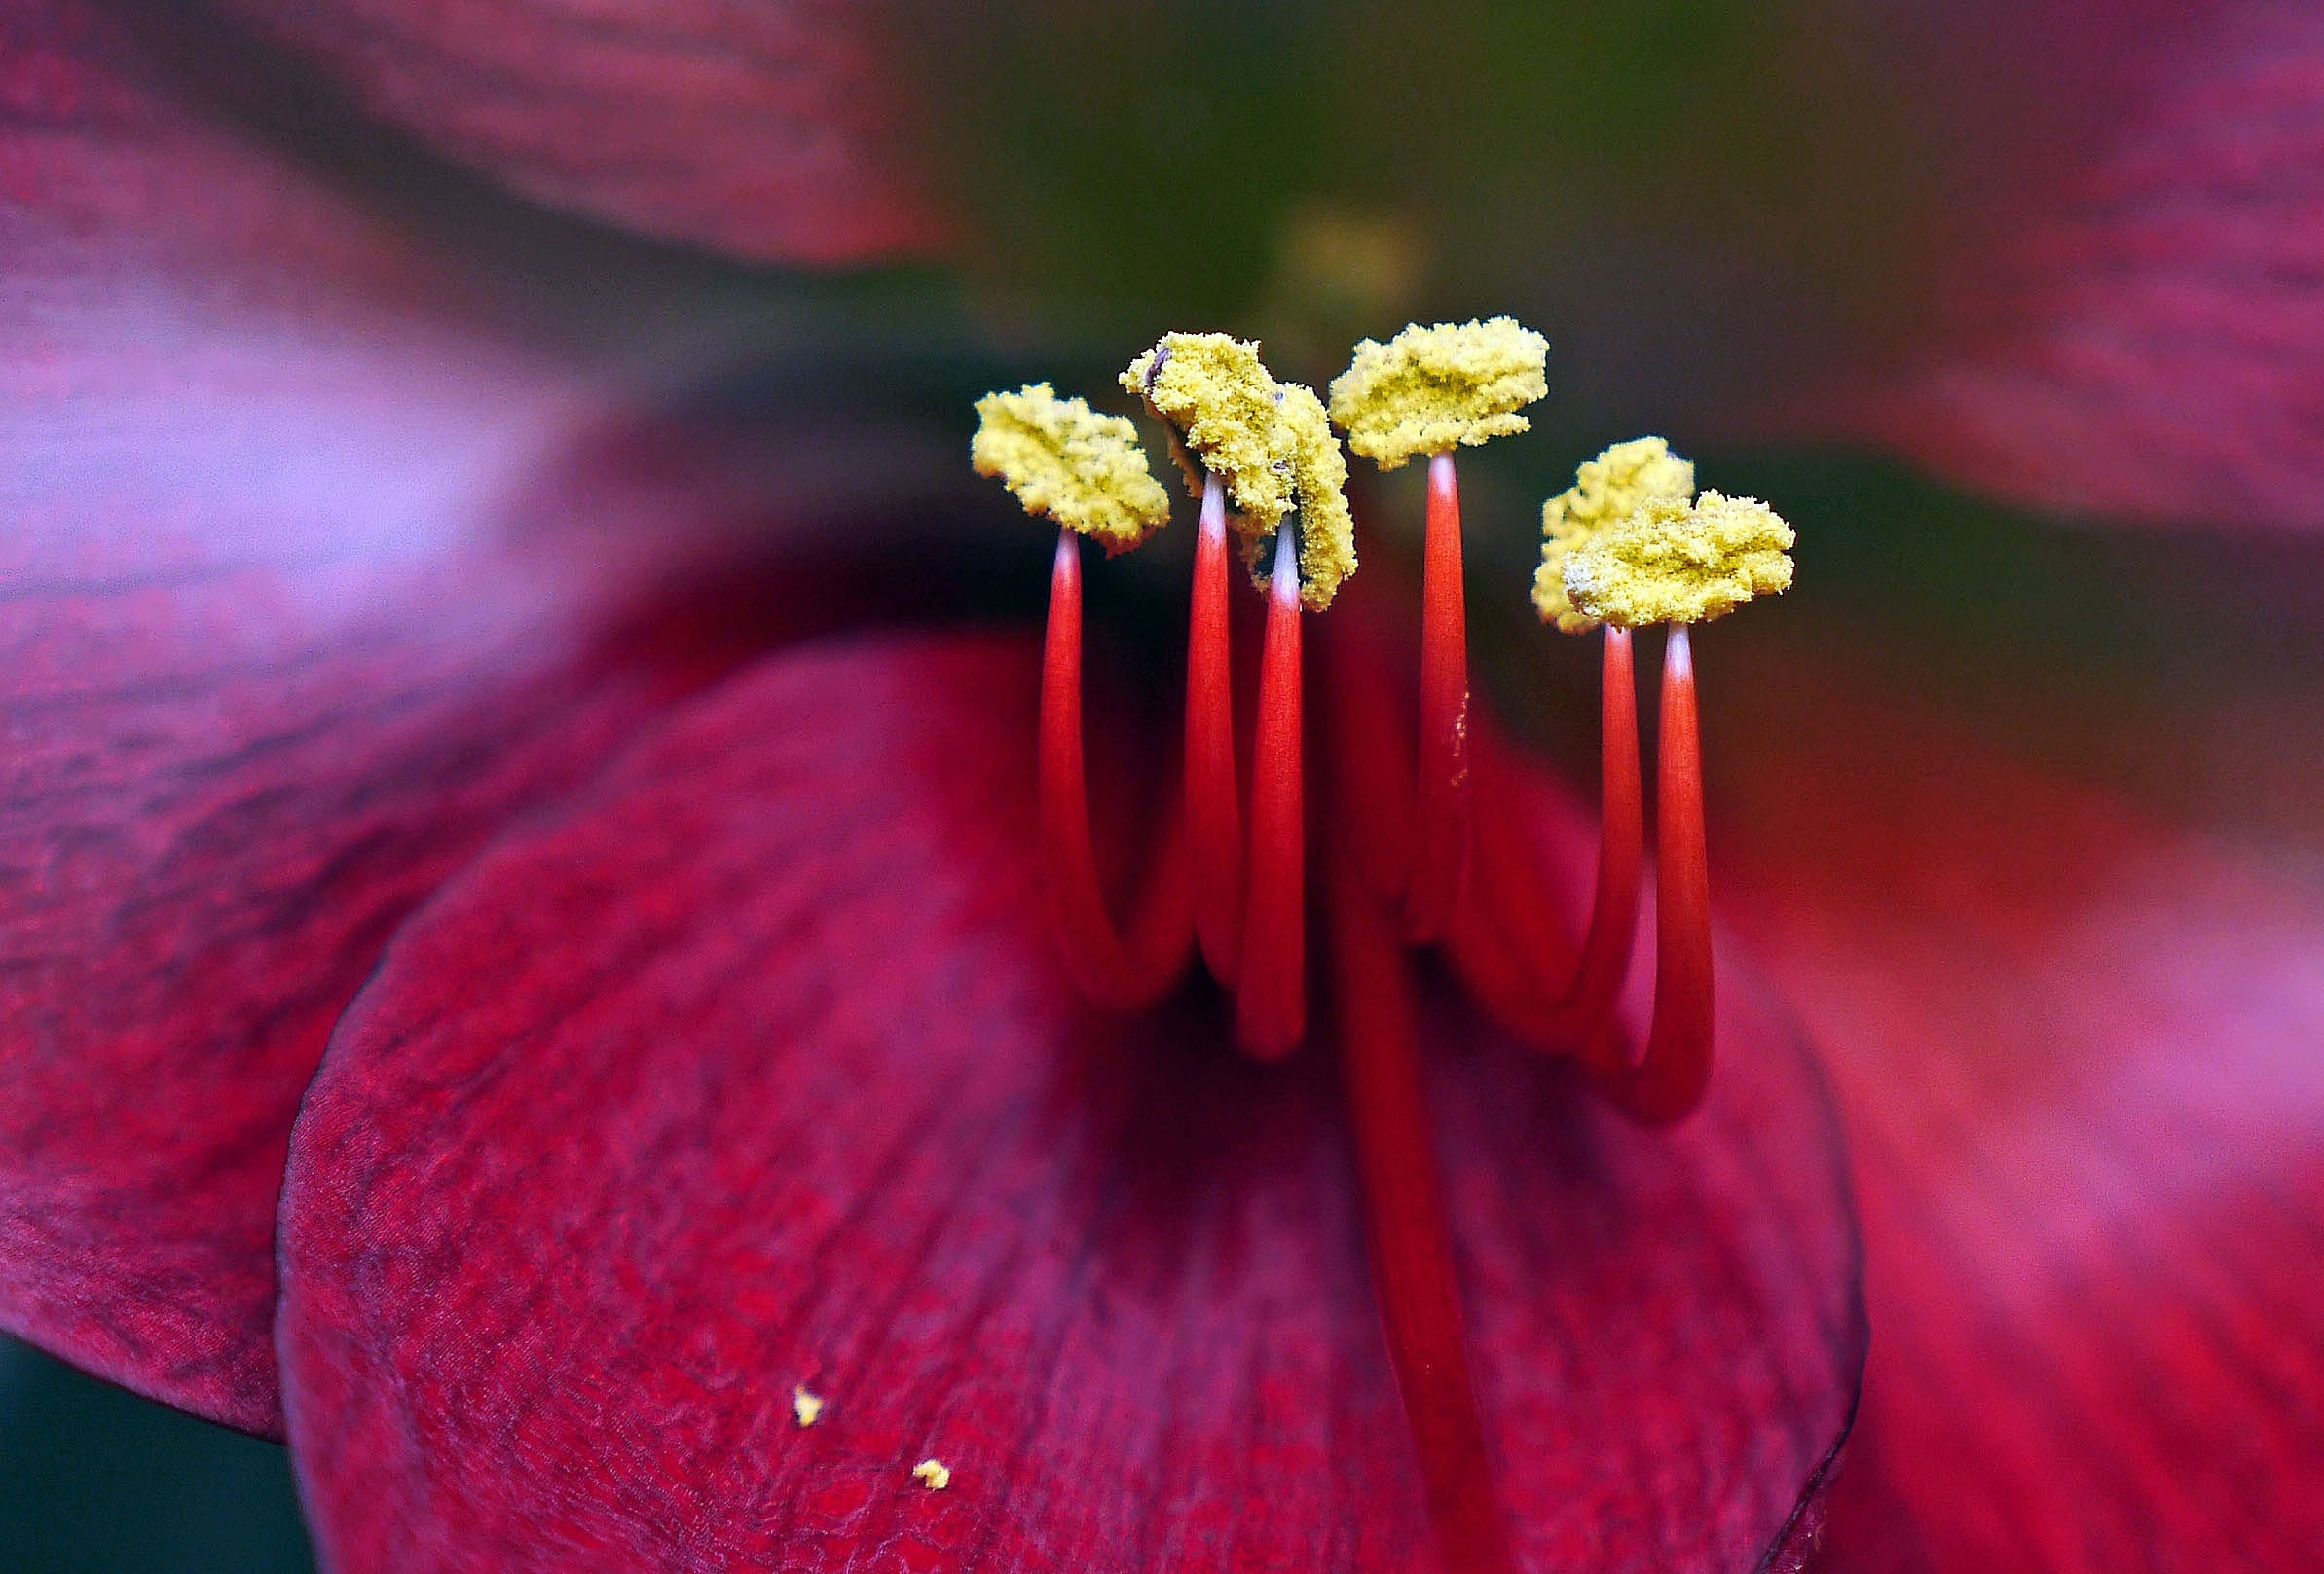 red hibiscus